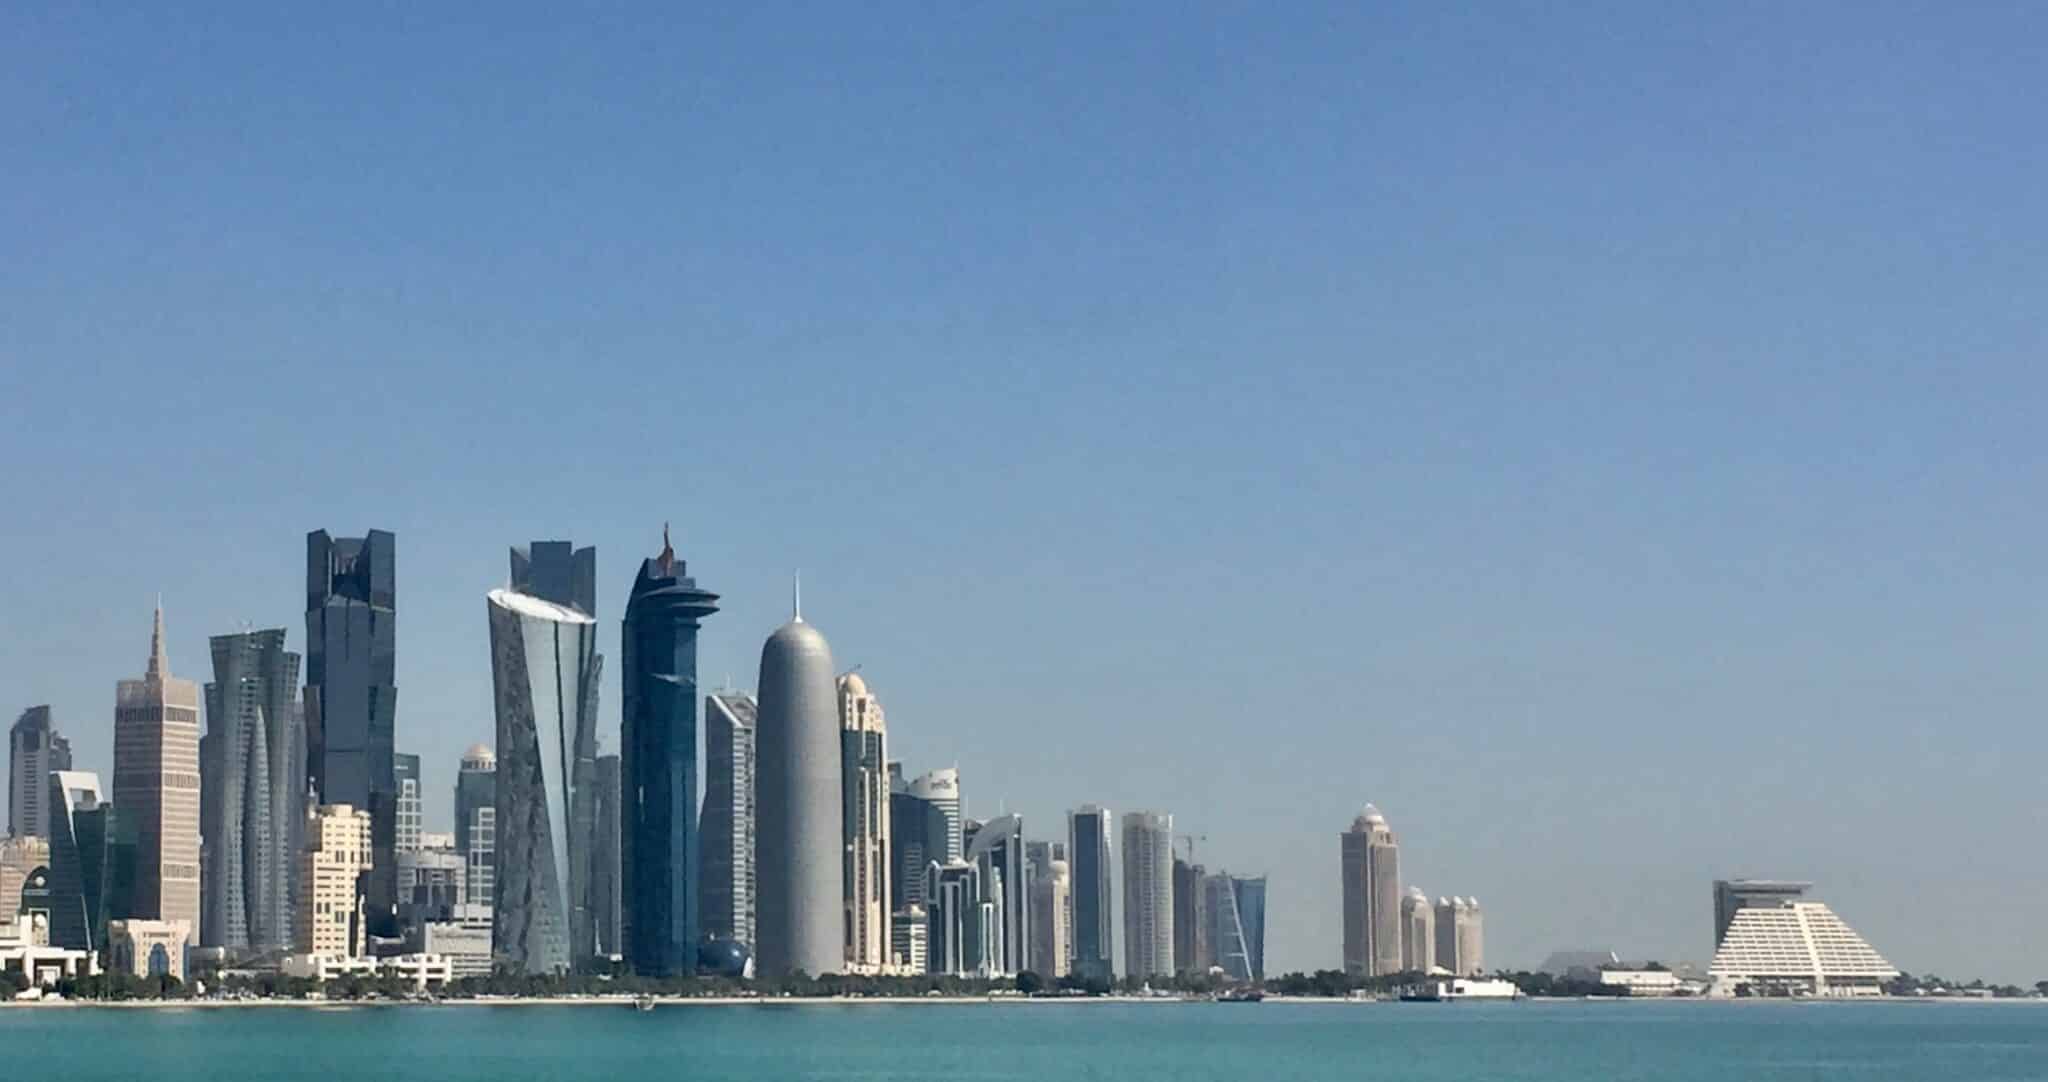 New Doha looks like this